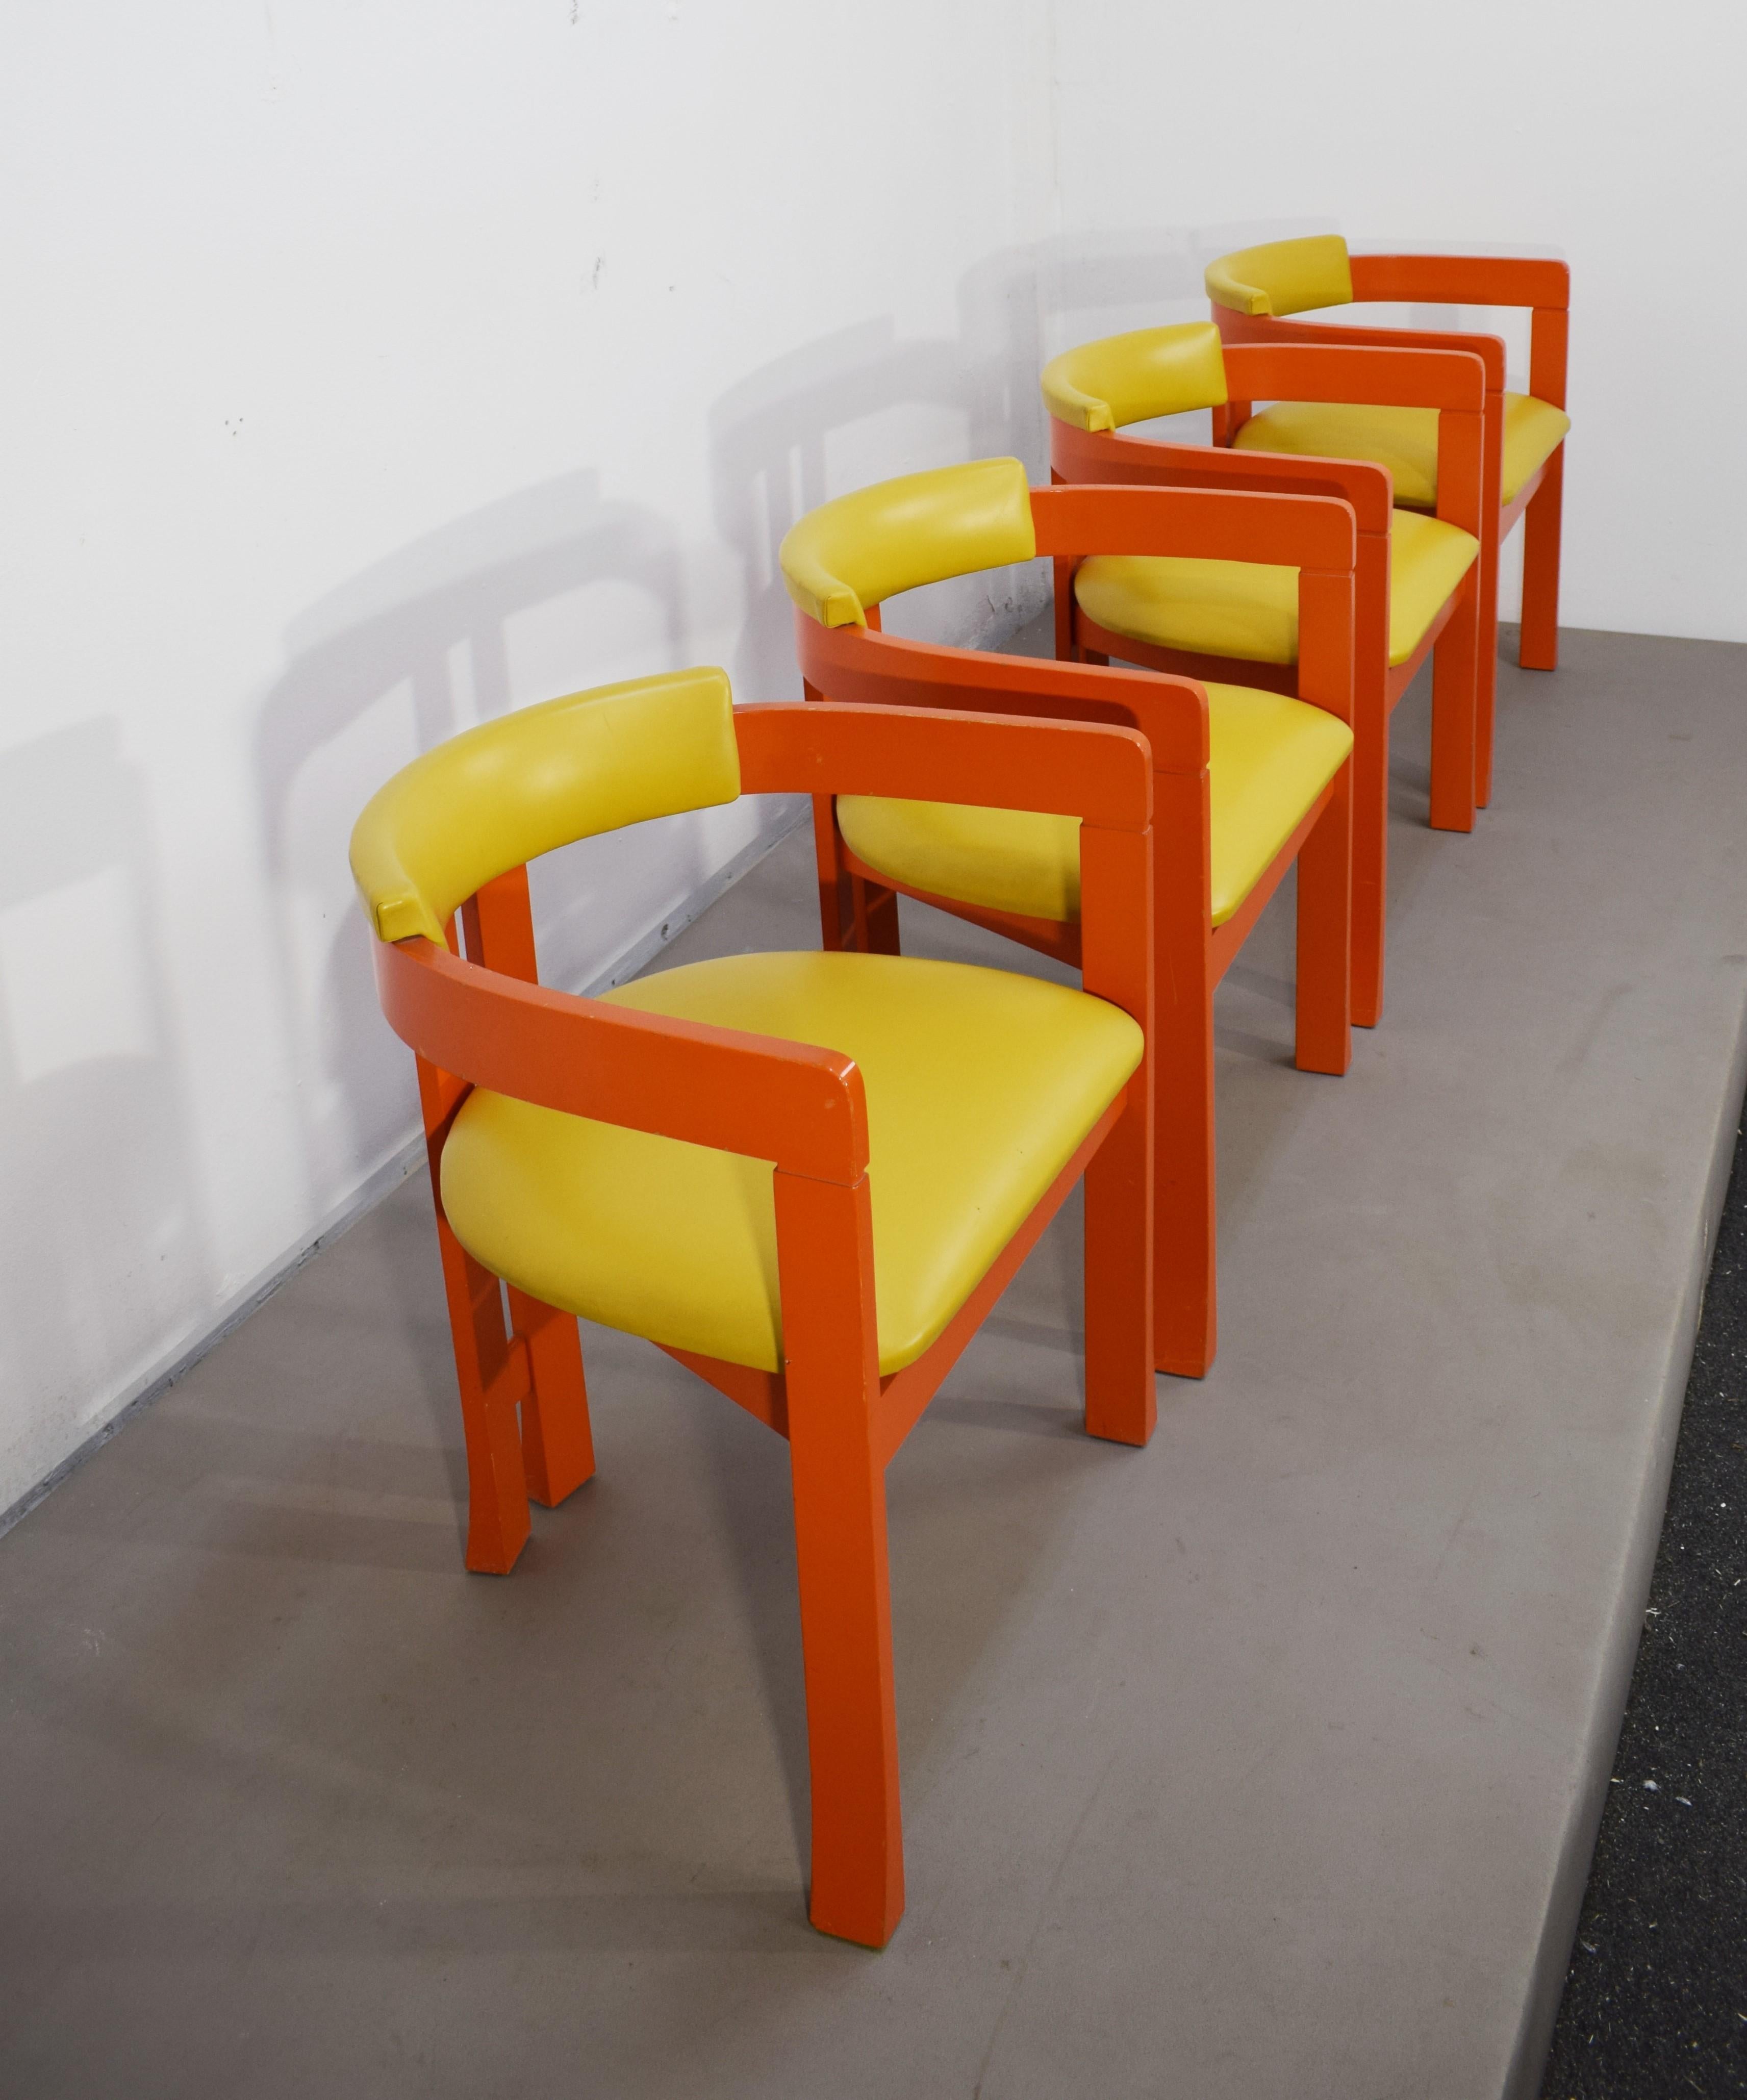 Set of 4 Italian chairs, Pi  Greek style, 1960s.
Dimensions: H= 66 cm; W=57 cm; D= 46 cm; H seat= 42 cm. 